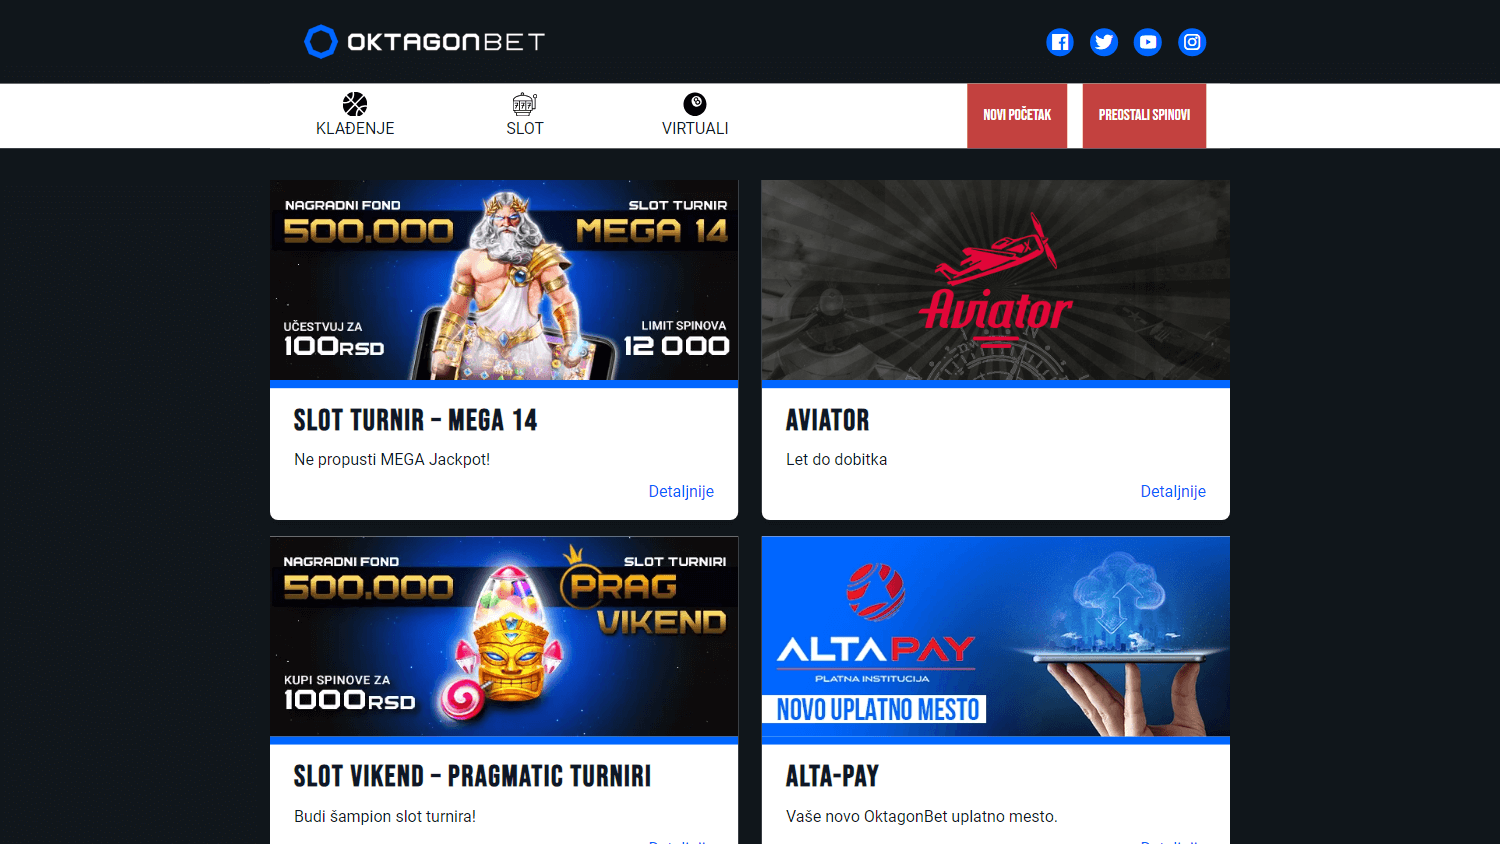 oktagonbet_casino_promotions_desktop